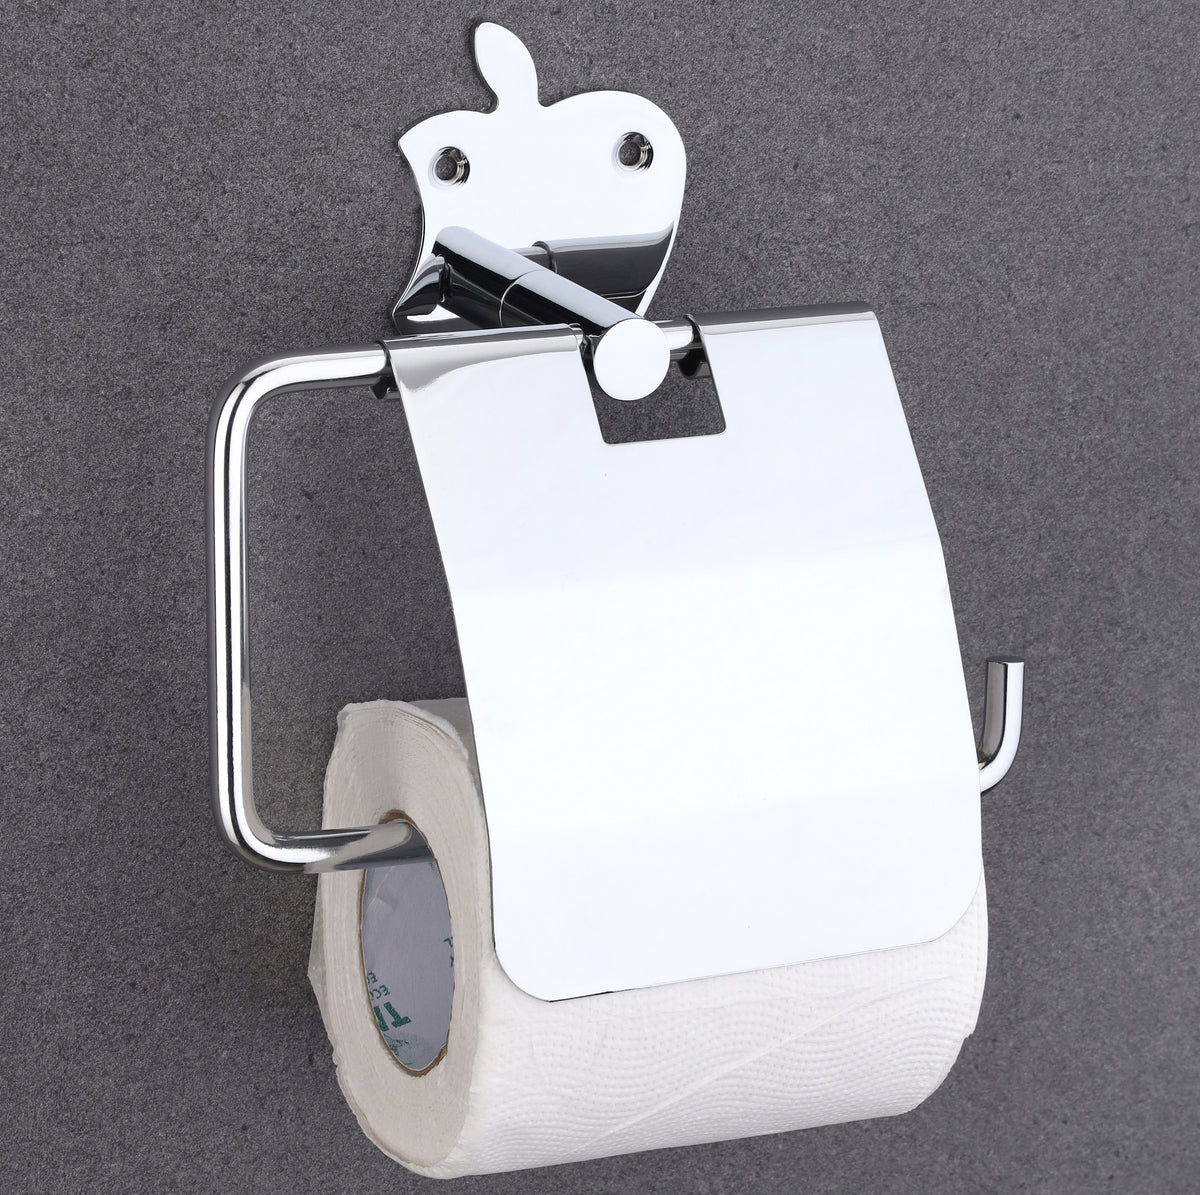 Apple Shape Stainless Steel Silver Toilet Paper Holder